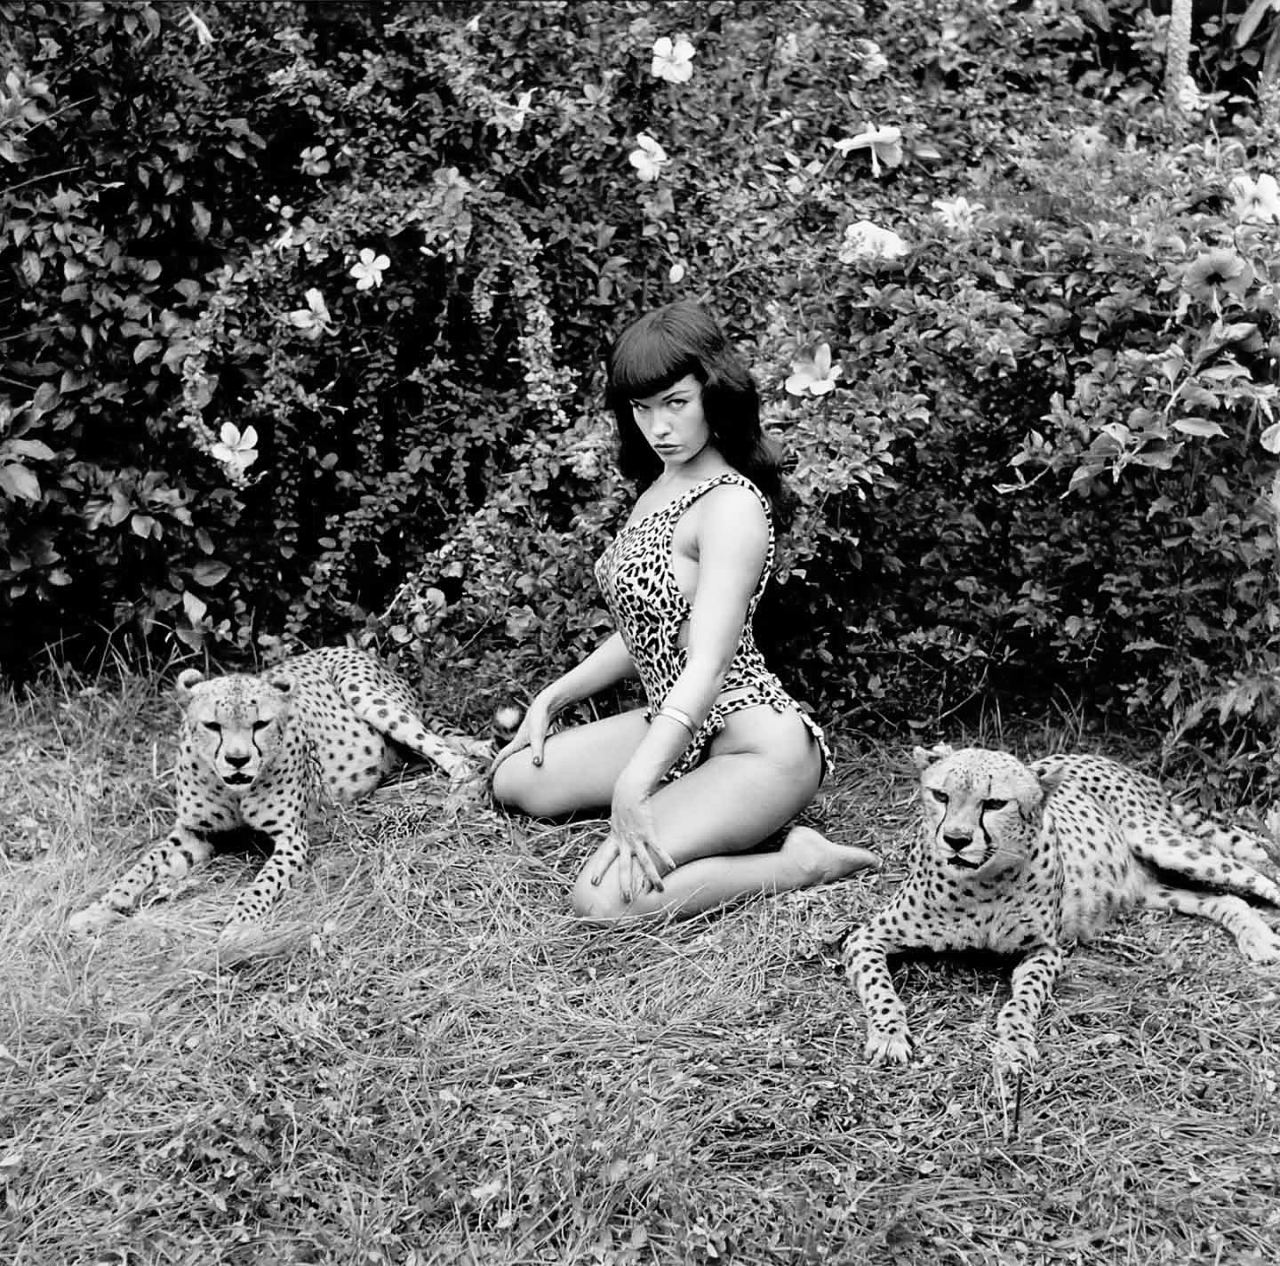 coitus-infinitus:
““Betttie Page with cheetahs - cat pose, 1954” ”